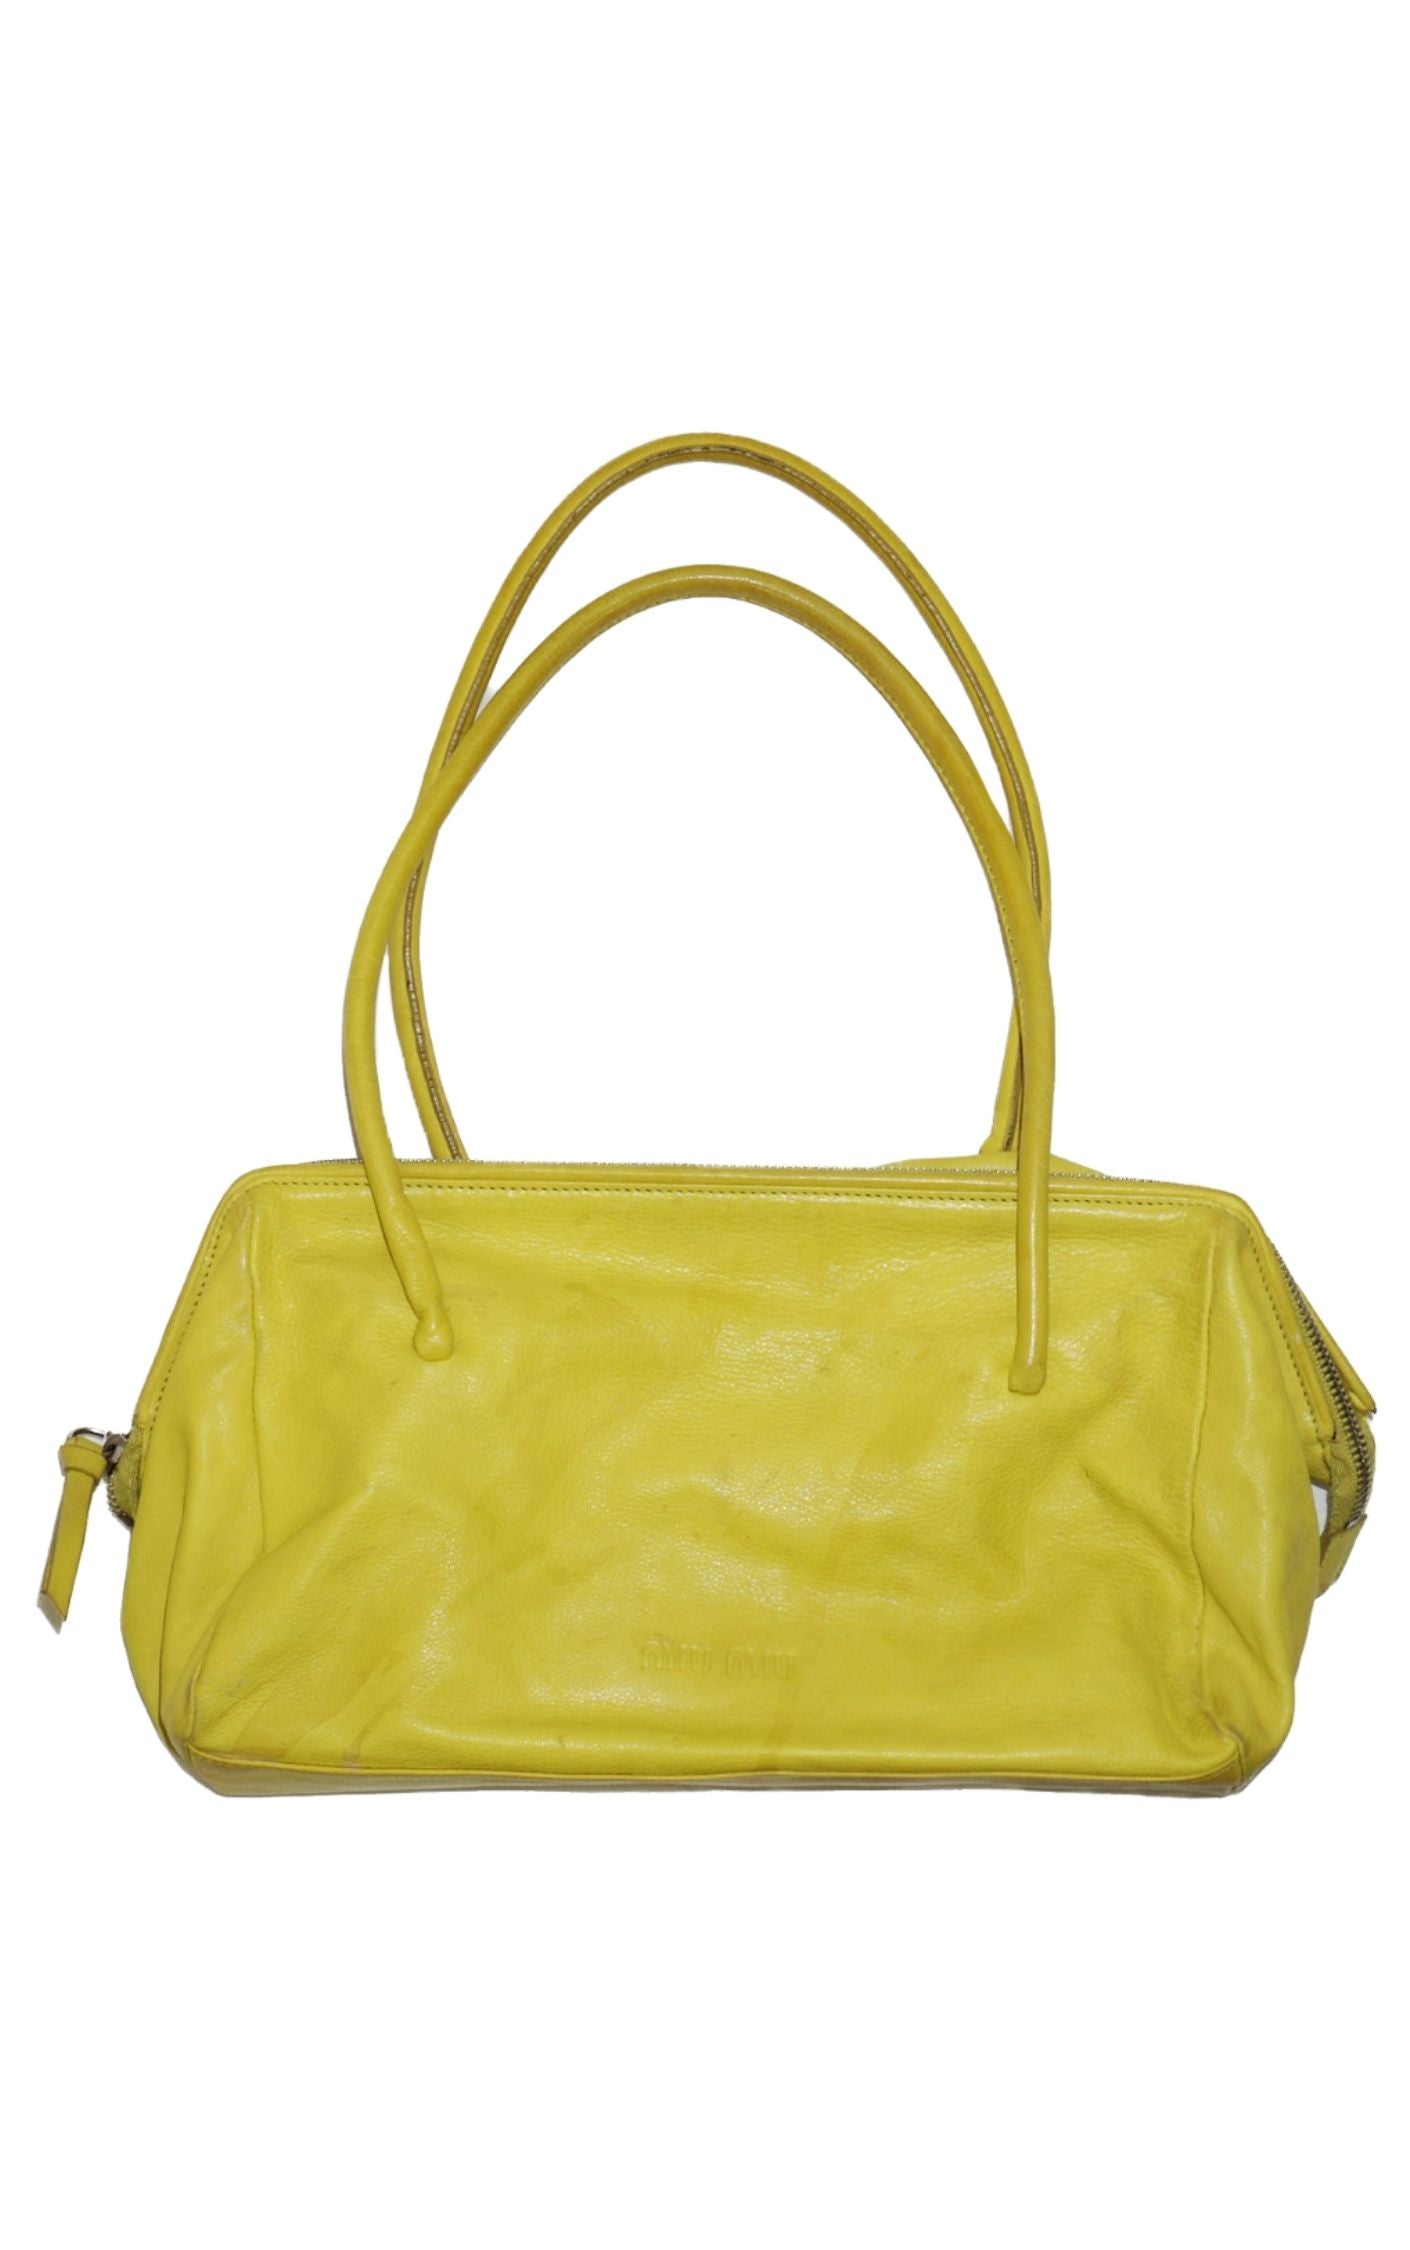 MIU MIU Neon Green Leather Baguette Bag RESELLUM